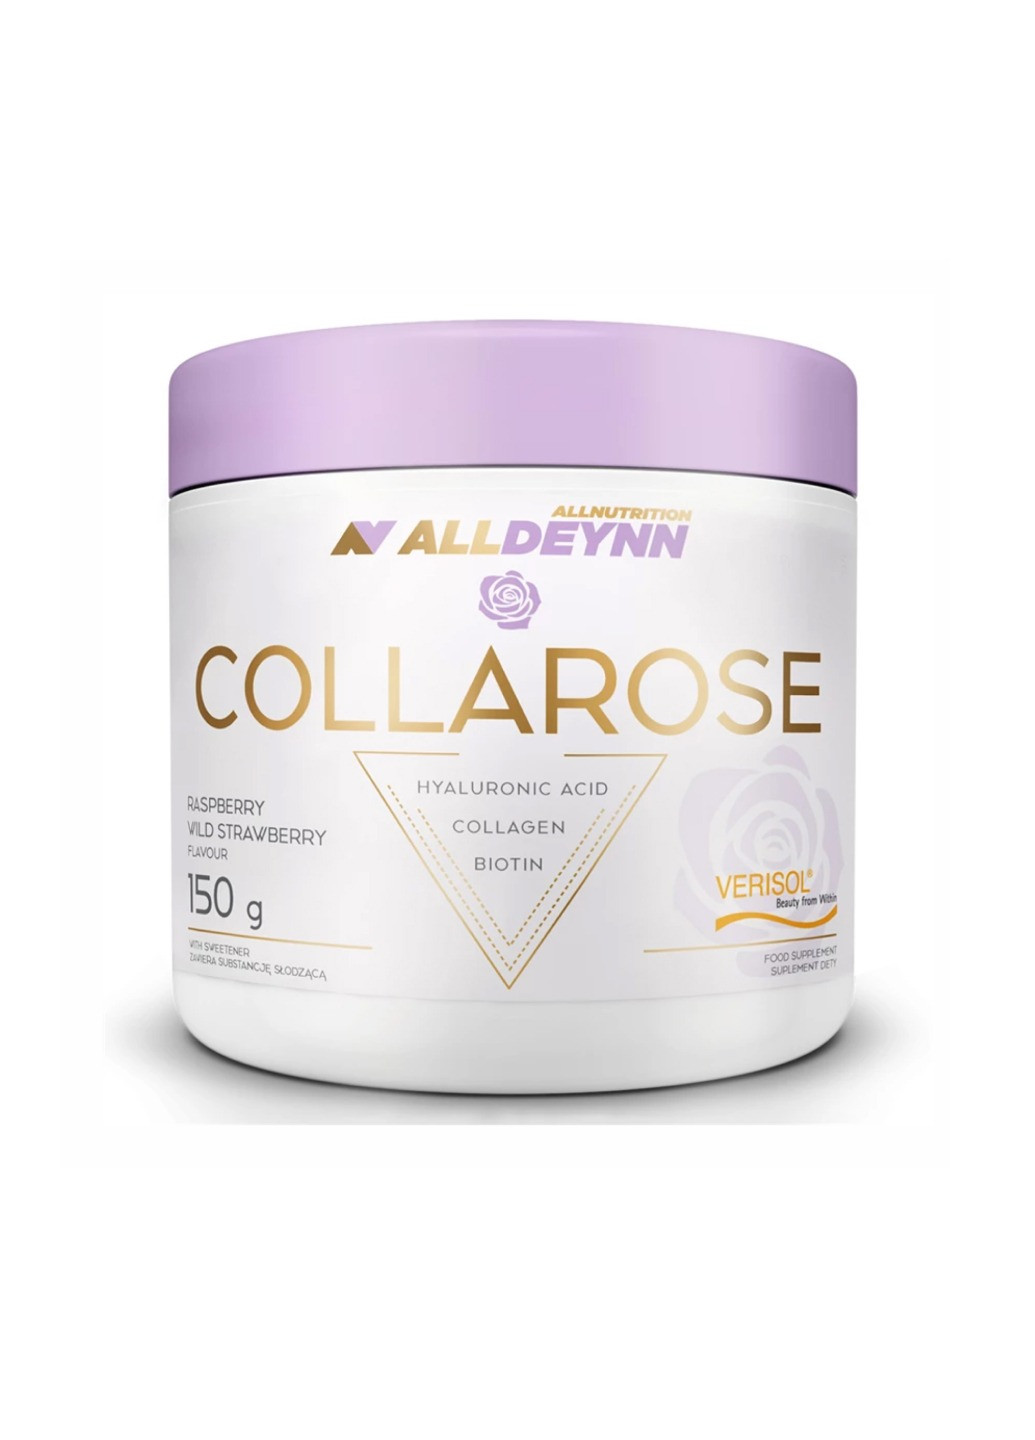 Пищевая добавка Alldeynn Collarose - 150g Orange Allnutrition (273183047)